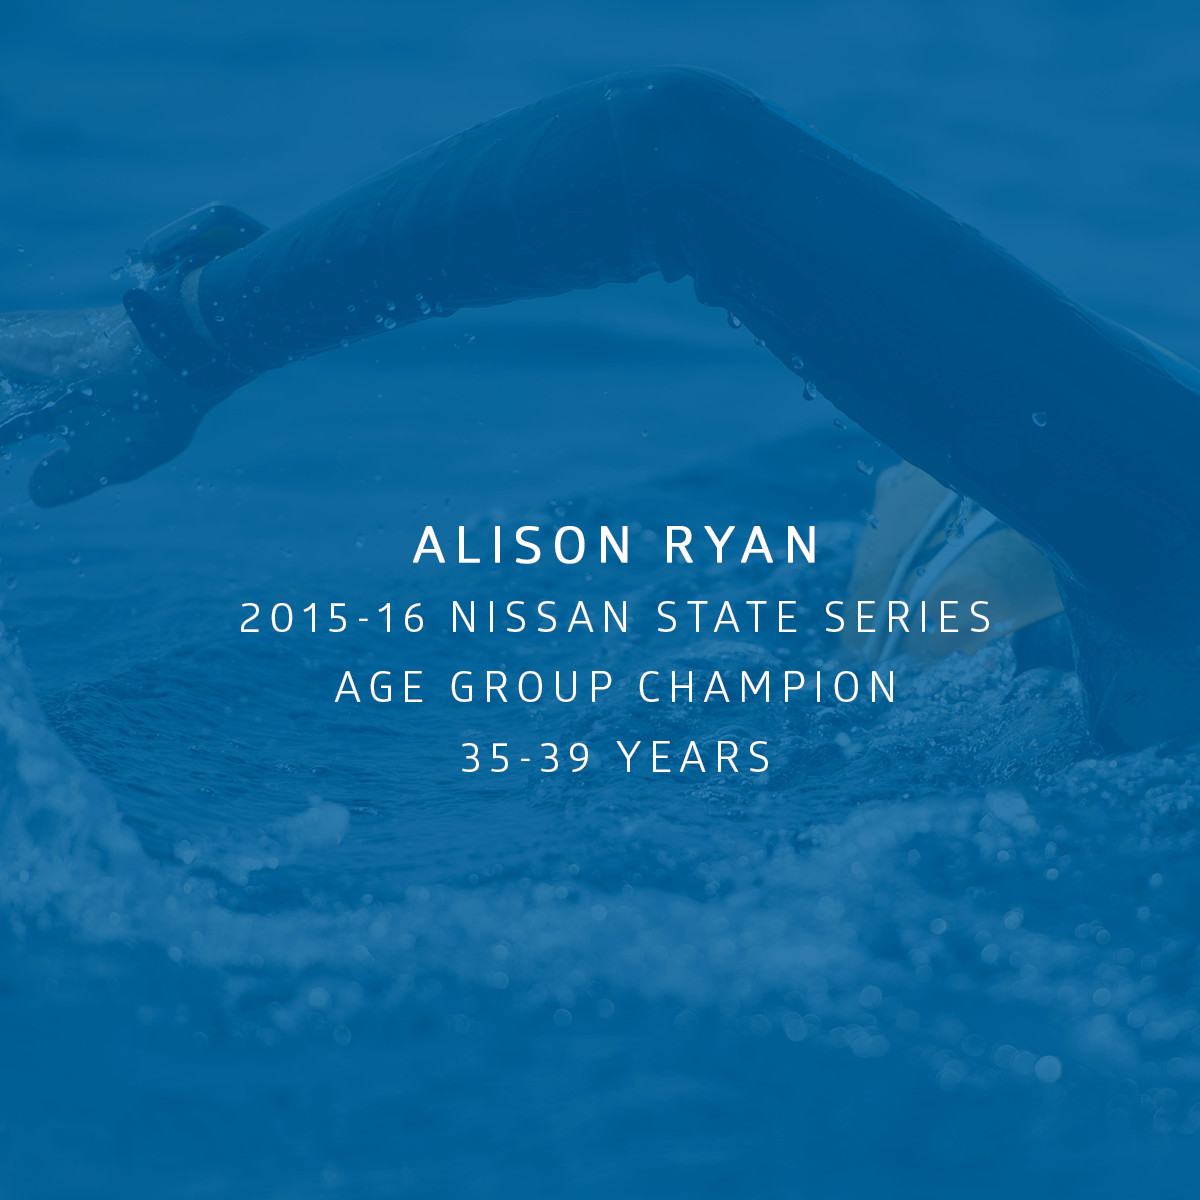 Alison Ryan